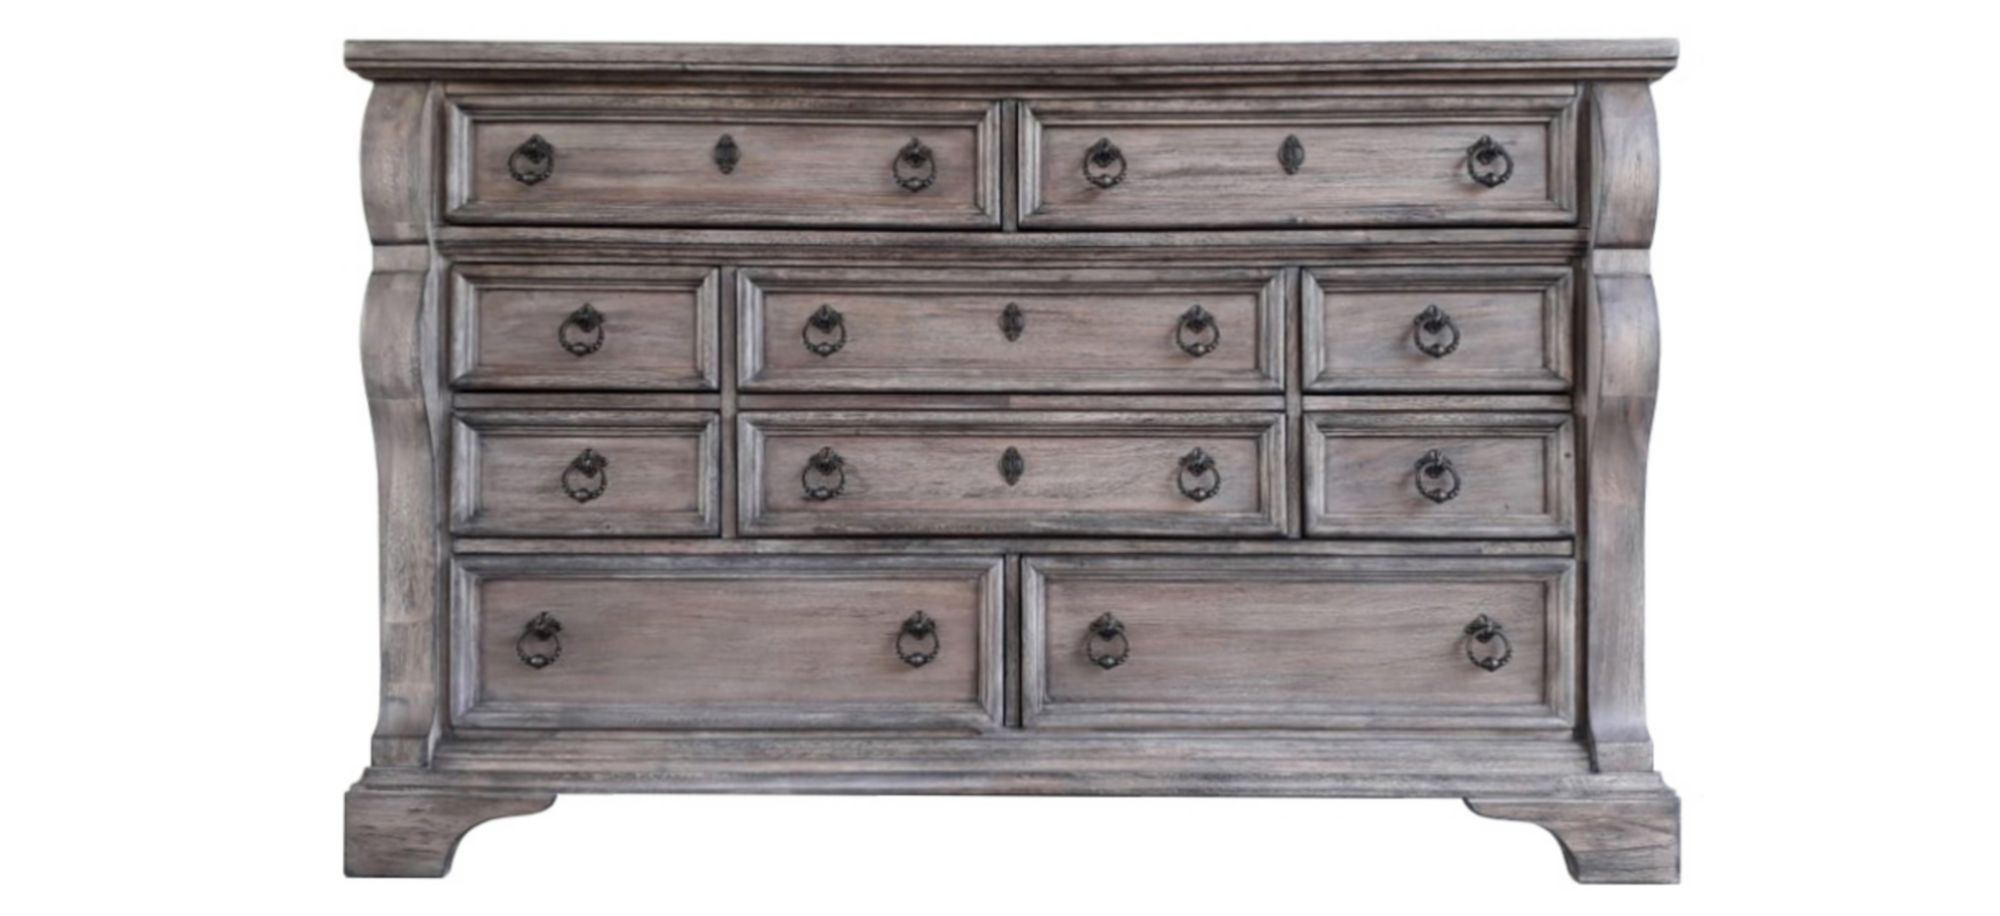 Heirloom Dresser in Rustic Charcoal Brown by American Woodcrafters